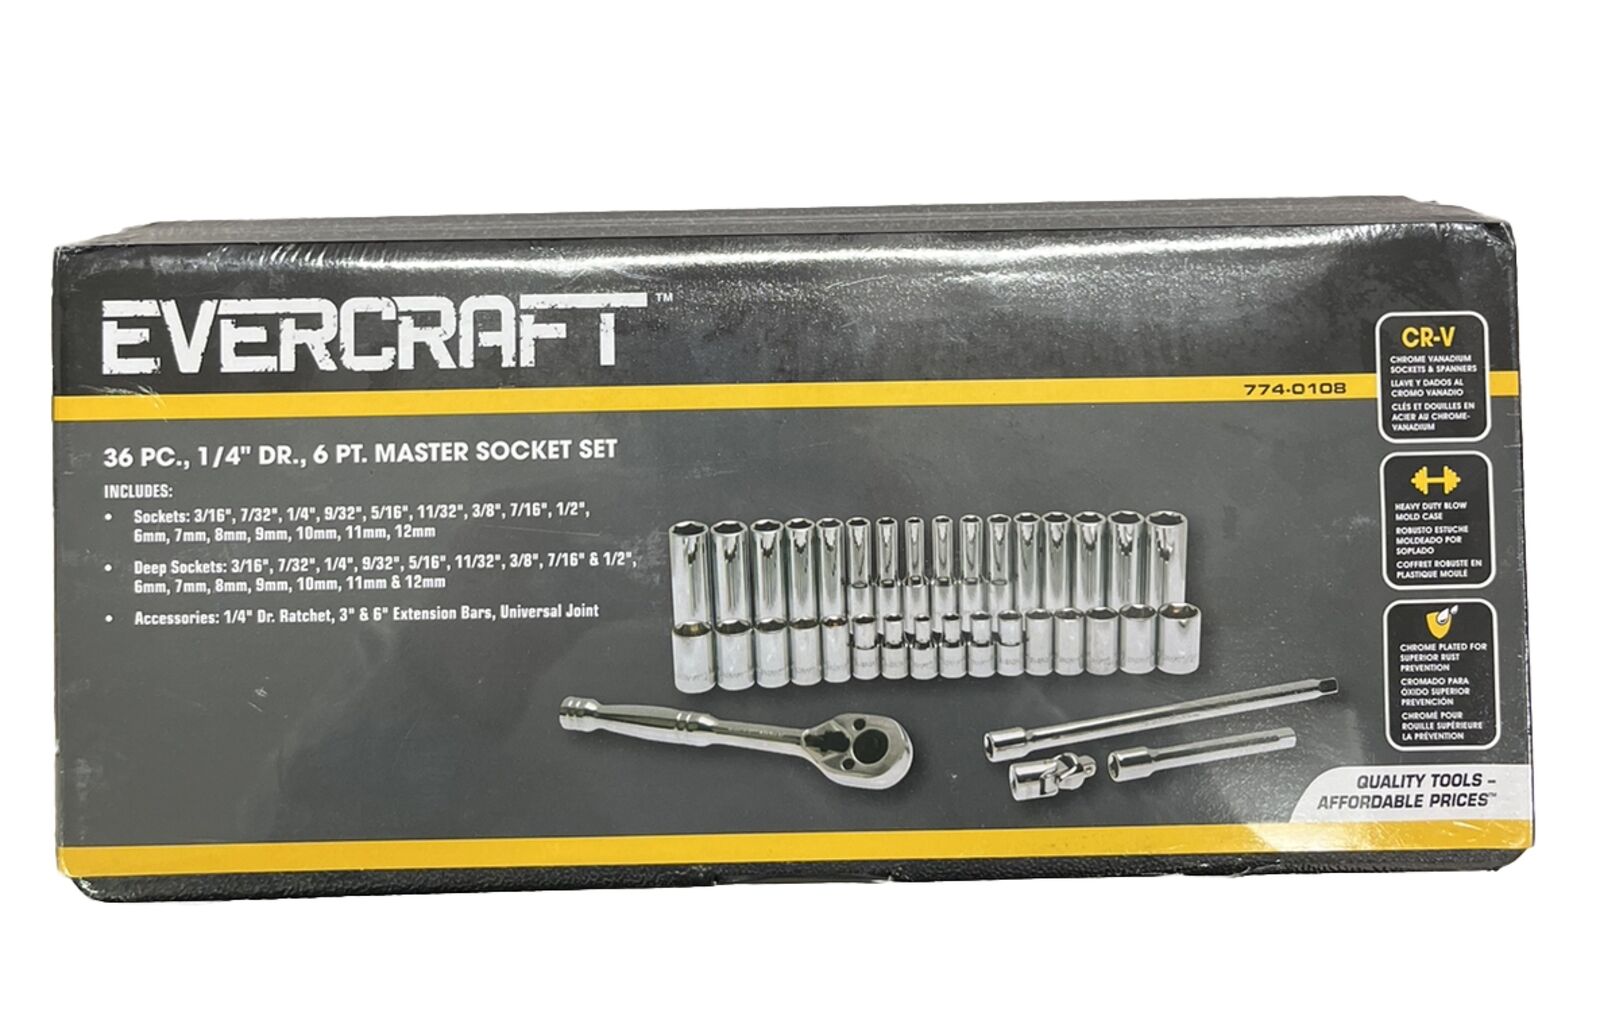 EVERCRAFT 36 PC., 1/4” DRIVE, 6 PT. MASTER SOCKET SET